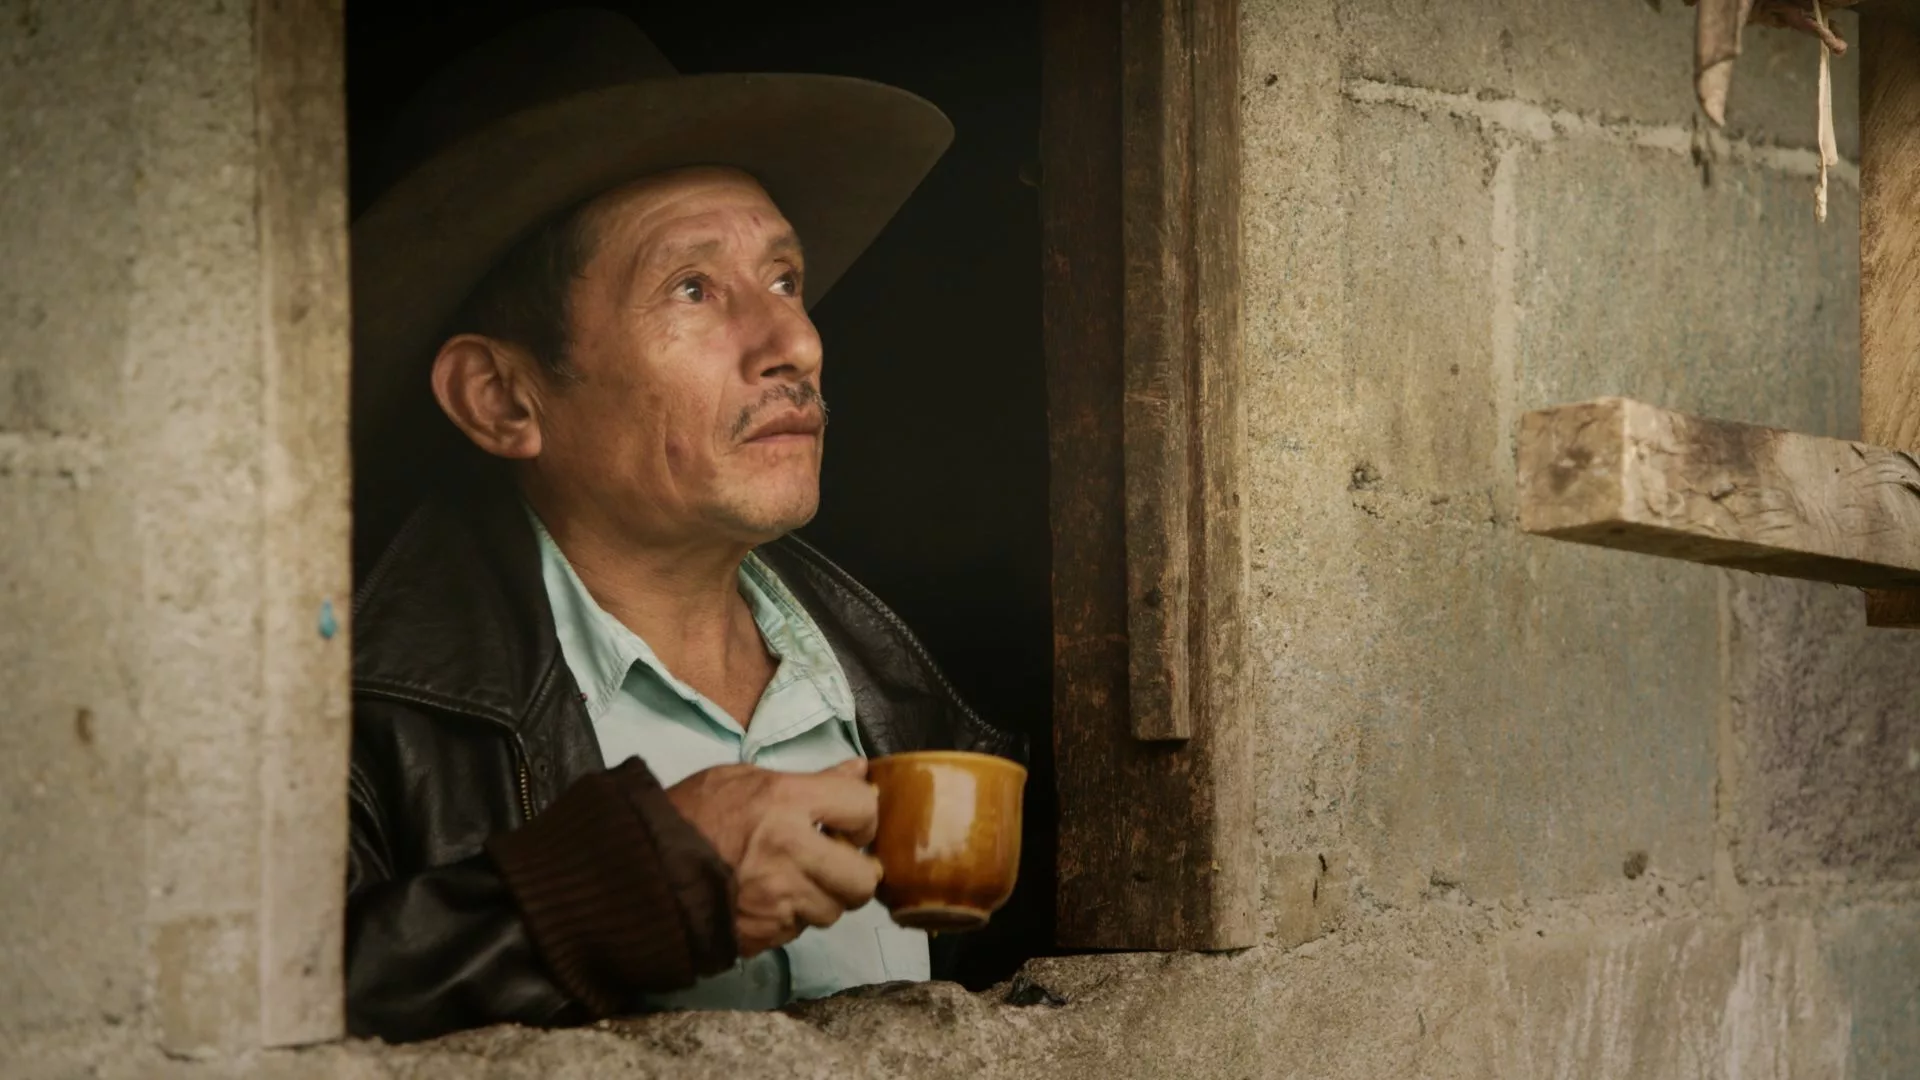 A man drinking Coffee